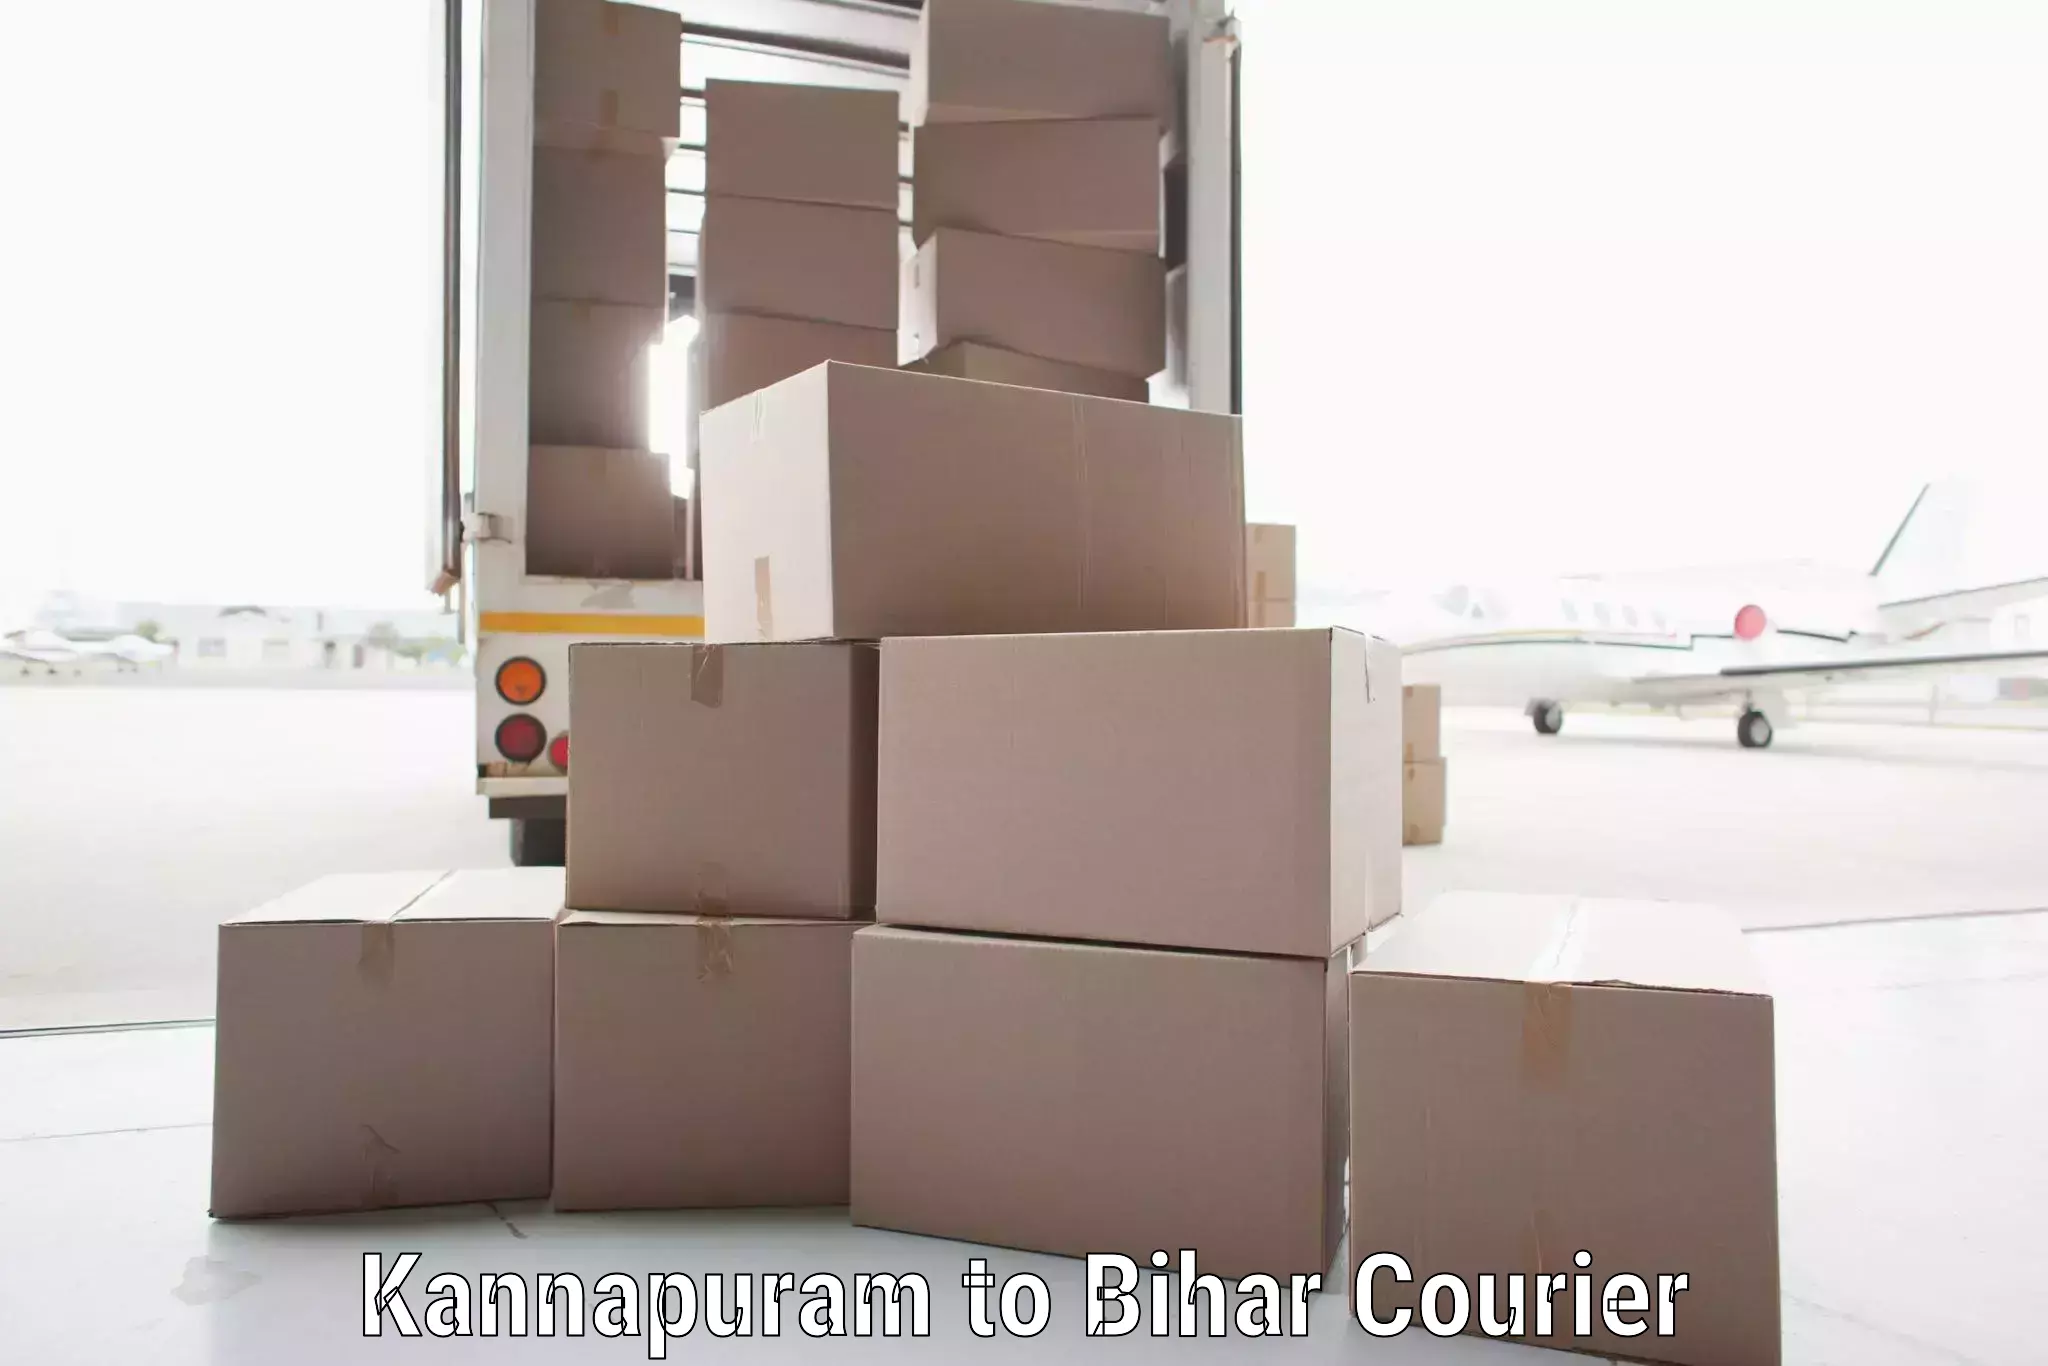 Specialized shipment handling Kannapuram to Bhorey